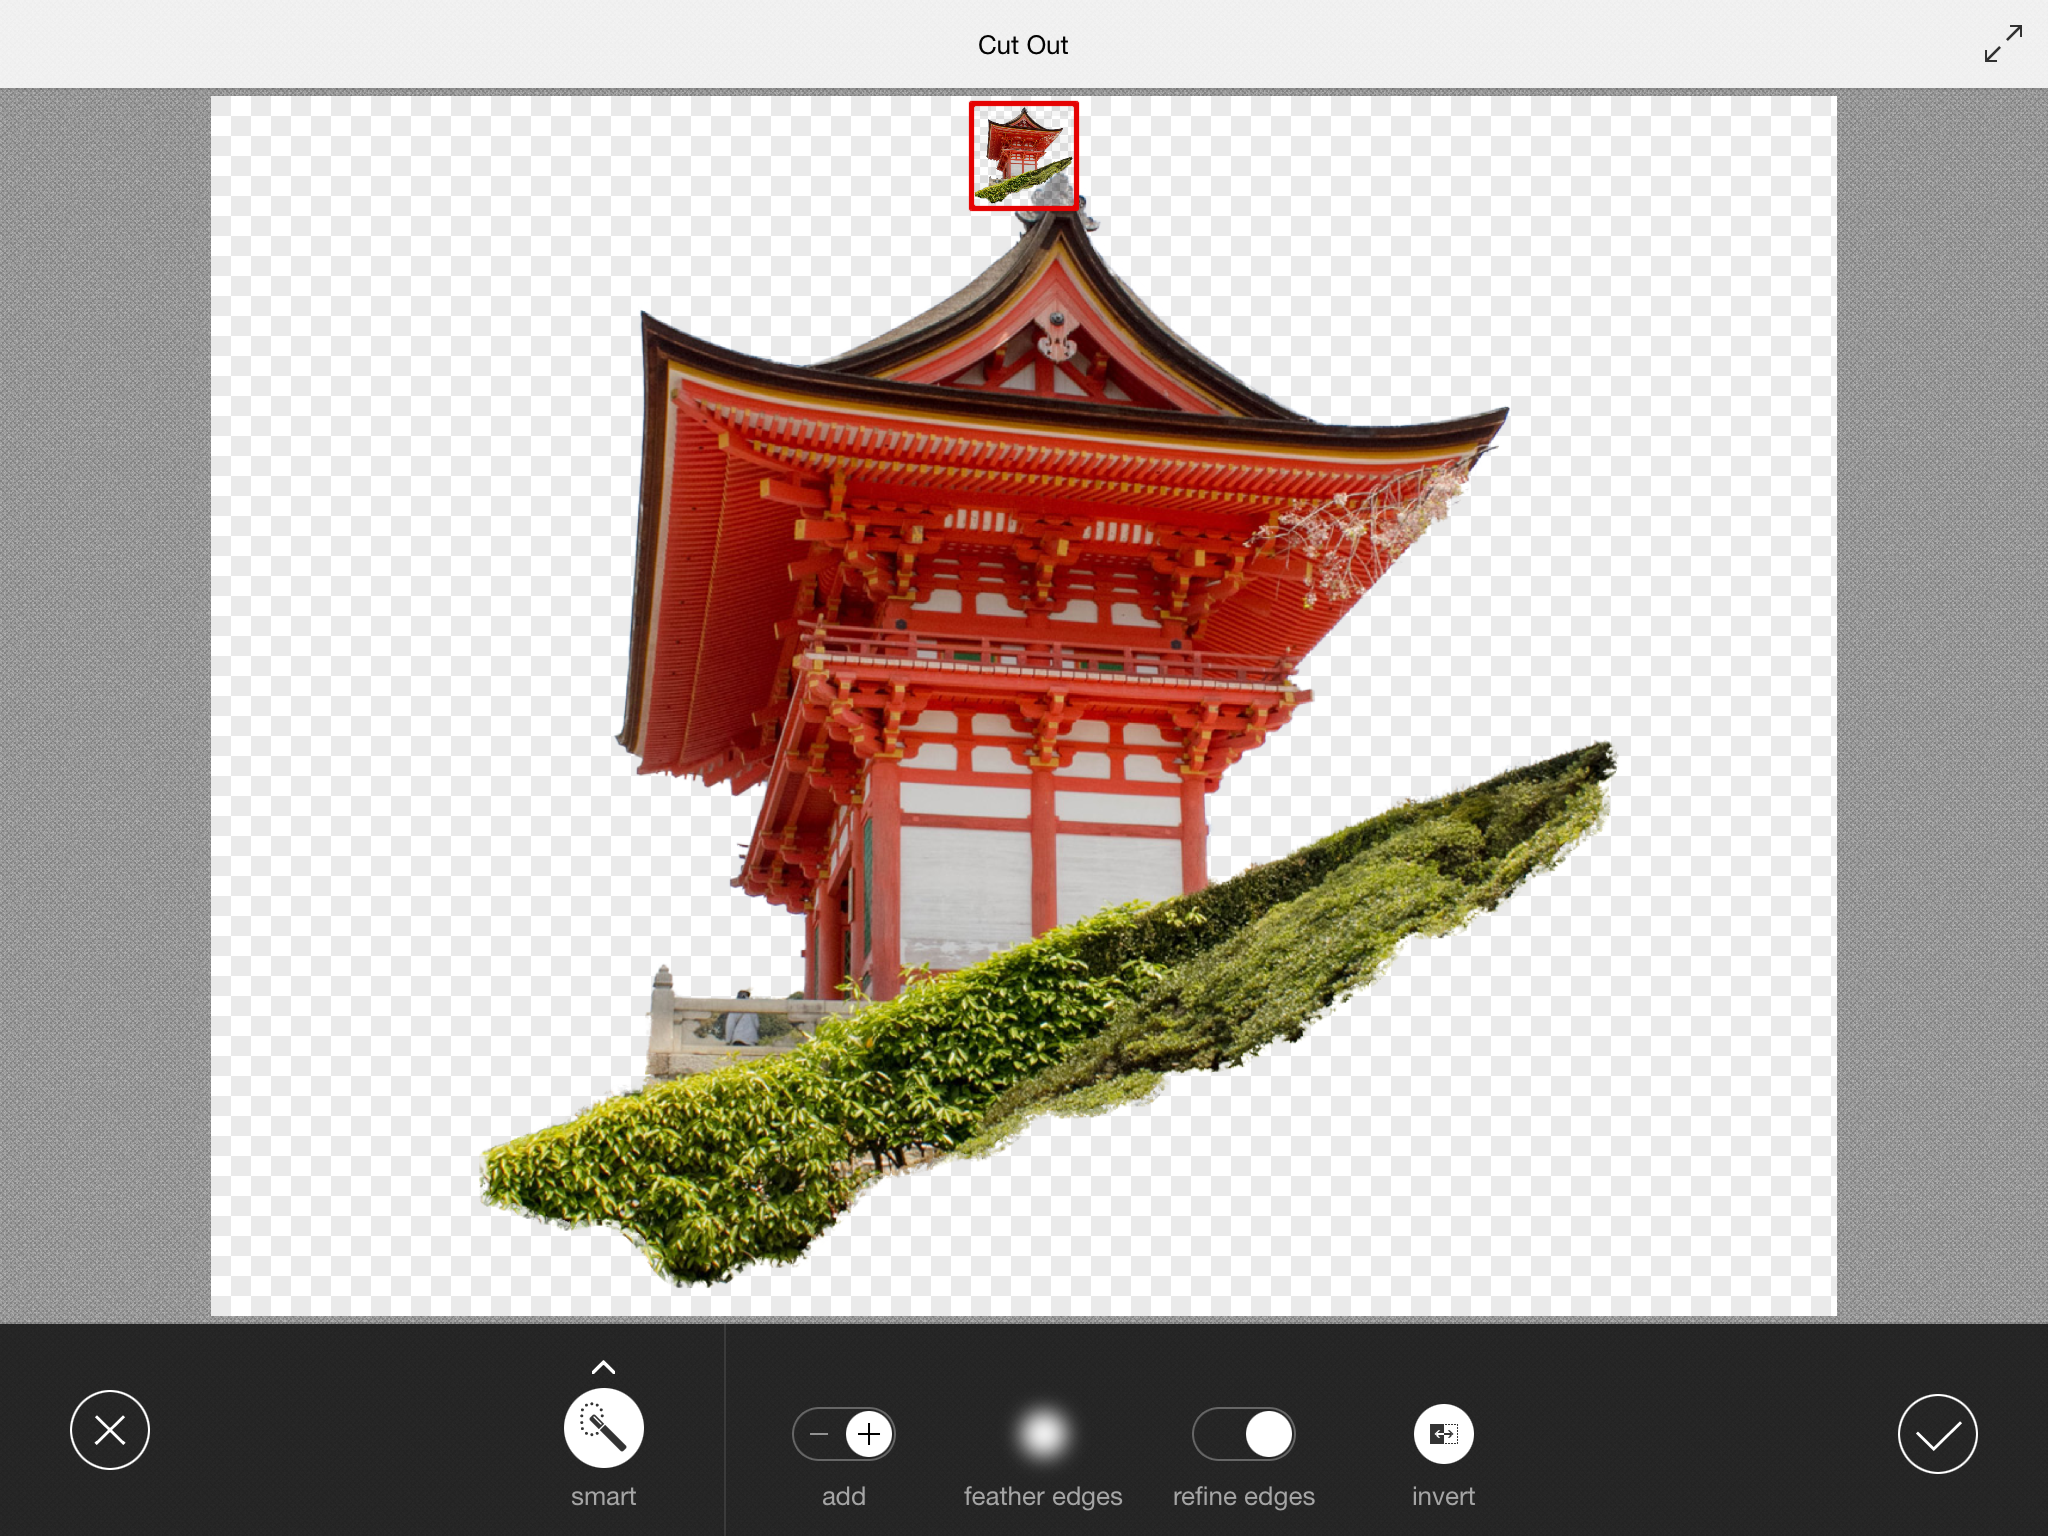 Photoshop Mix: Desktop-Lite Photo Editing Lands On The iPad